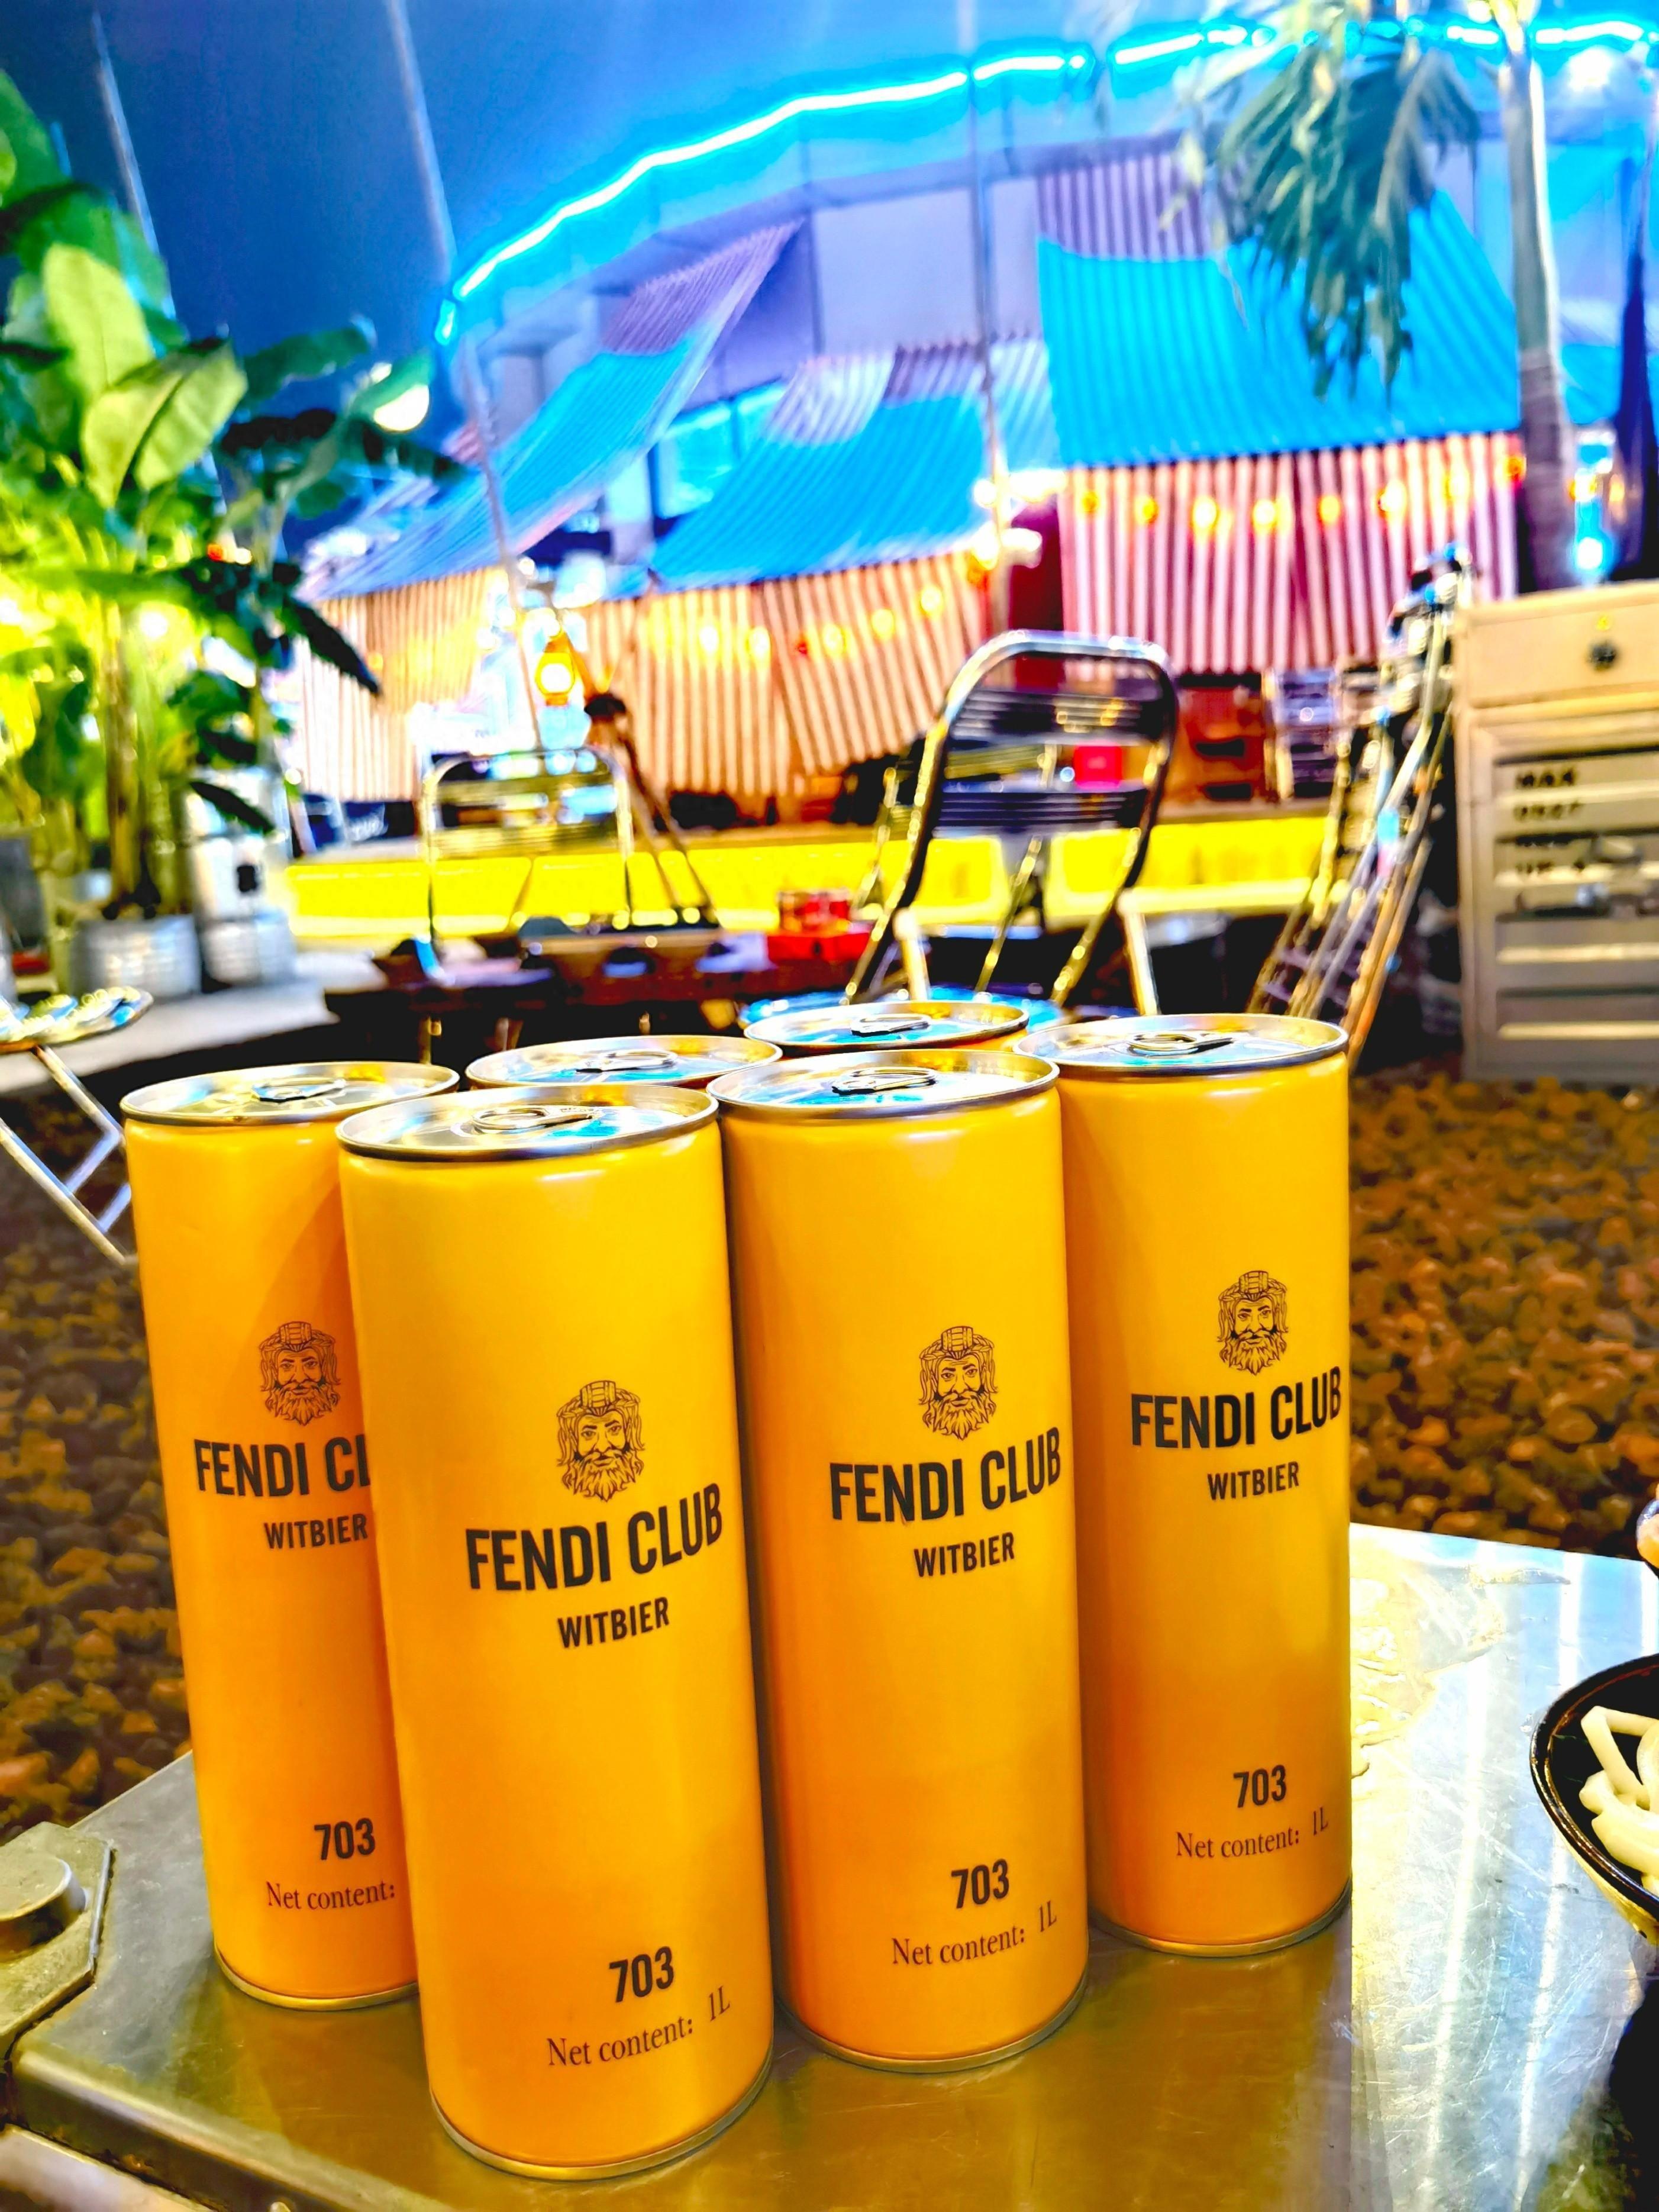 FENDI CLUB 是哪里的品牌，这个啤酒哪里买？